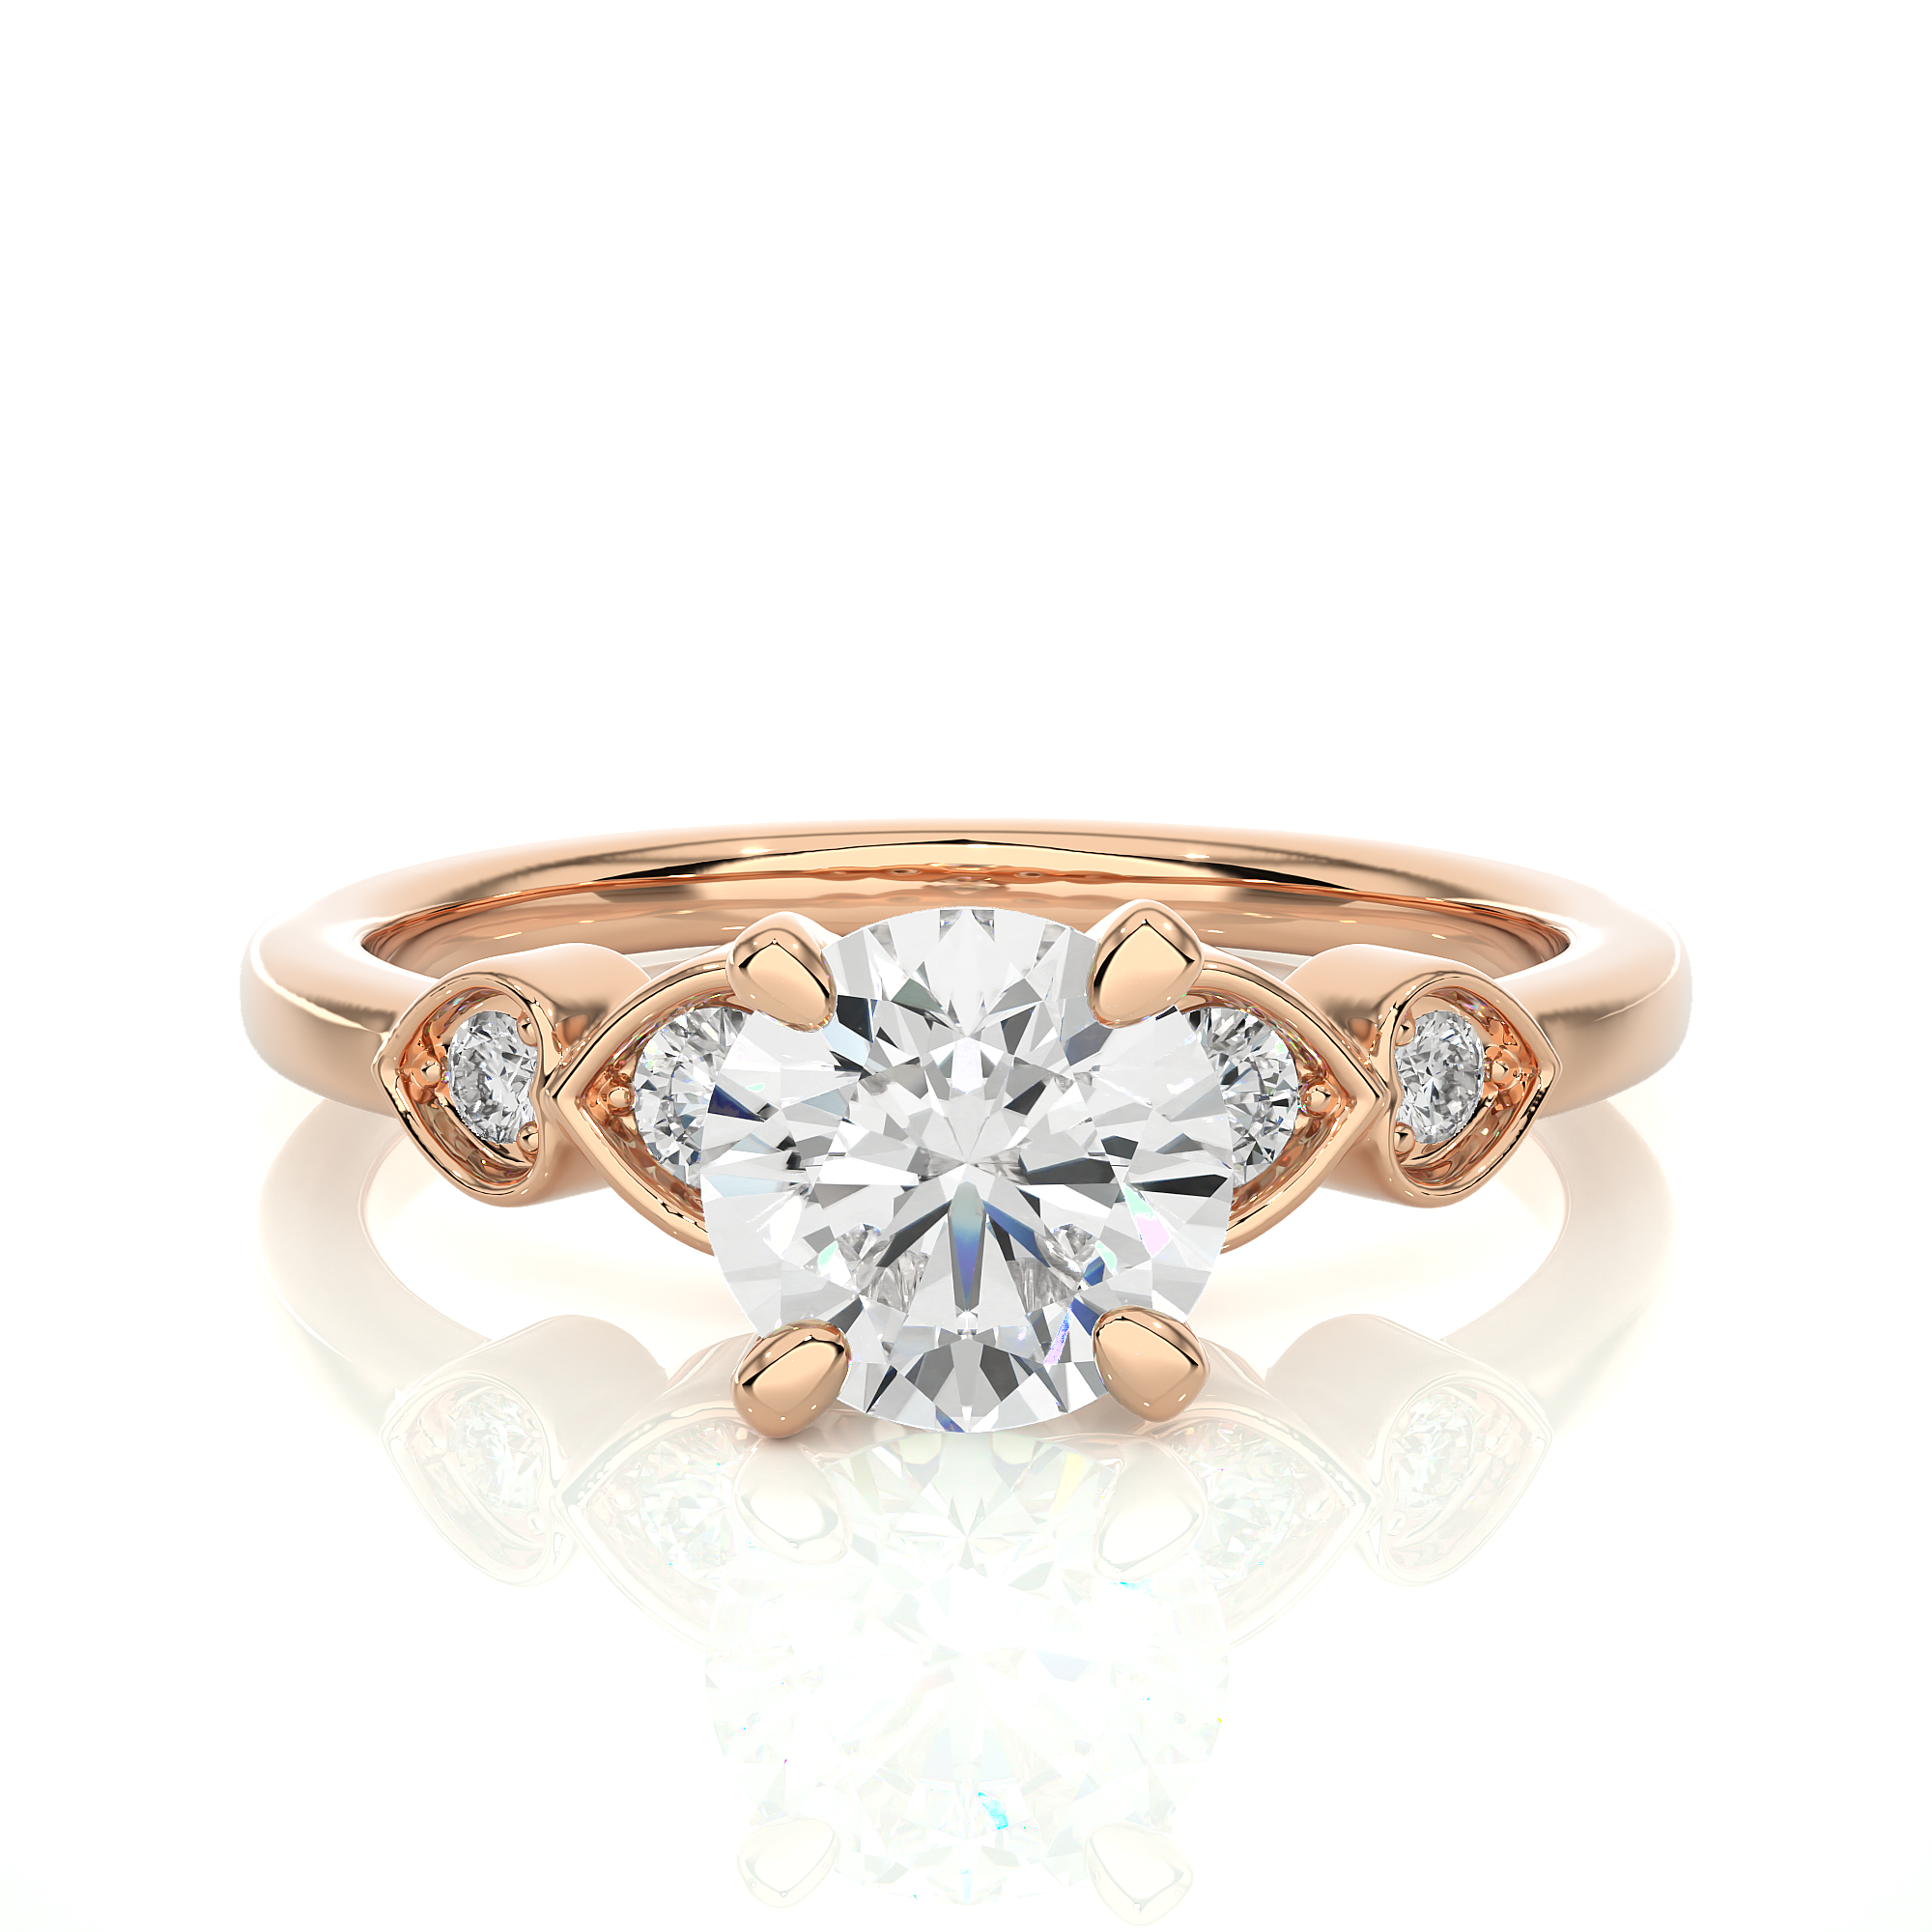 1.21 Ct Round Cut Solitaire Diamond Ring in 14Kt Rose Gold - Blu Diamonds